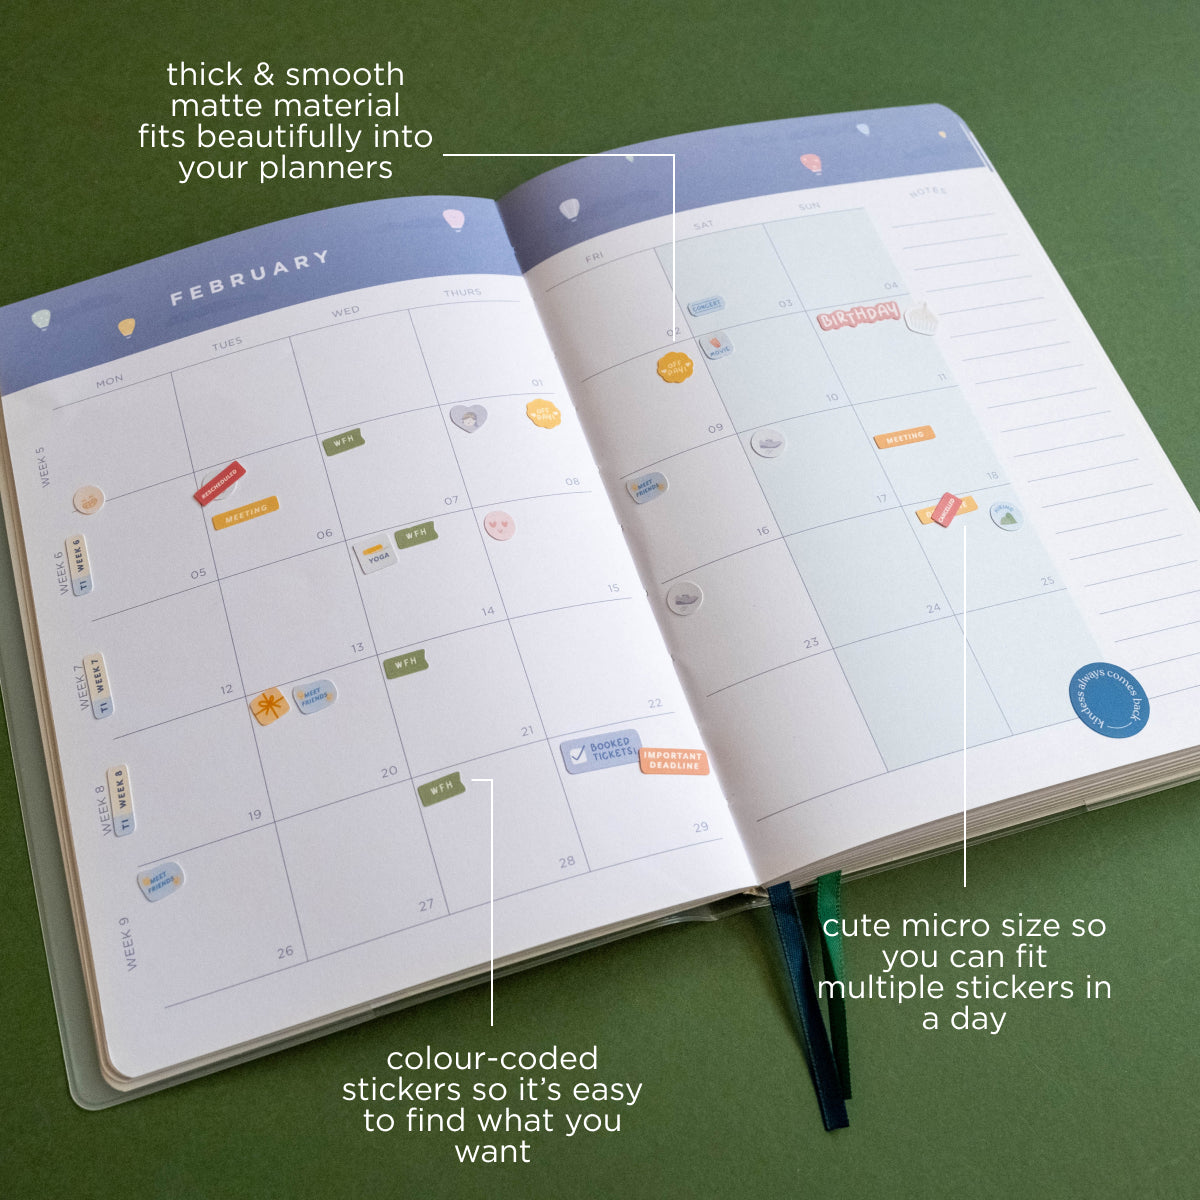 Meetings (Work/School) - Colour-coded Planner Sticker Sheet